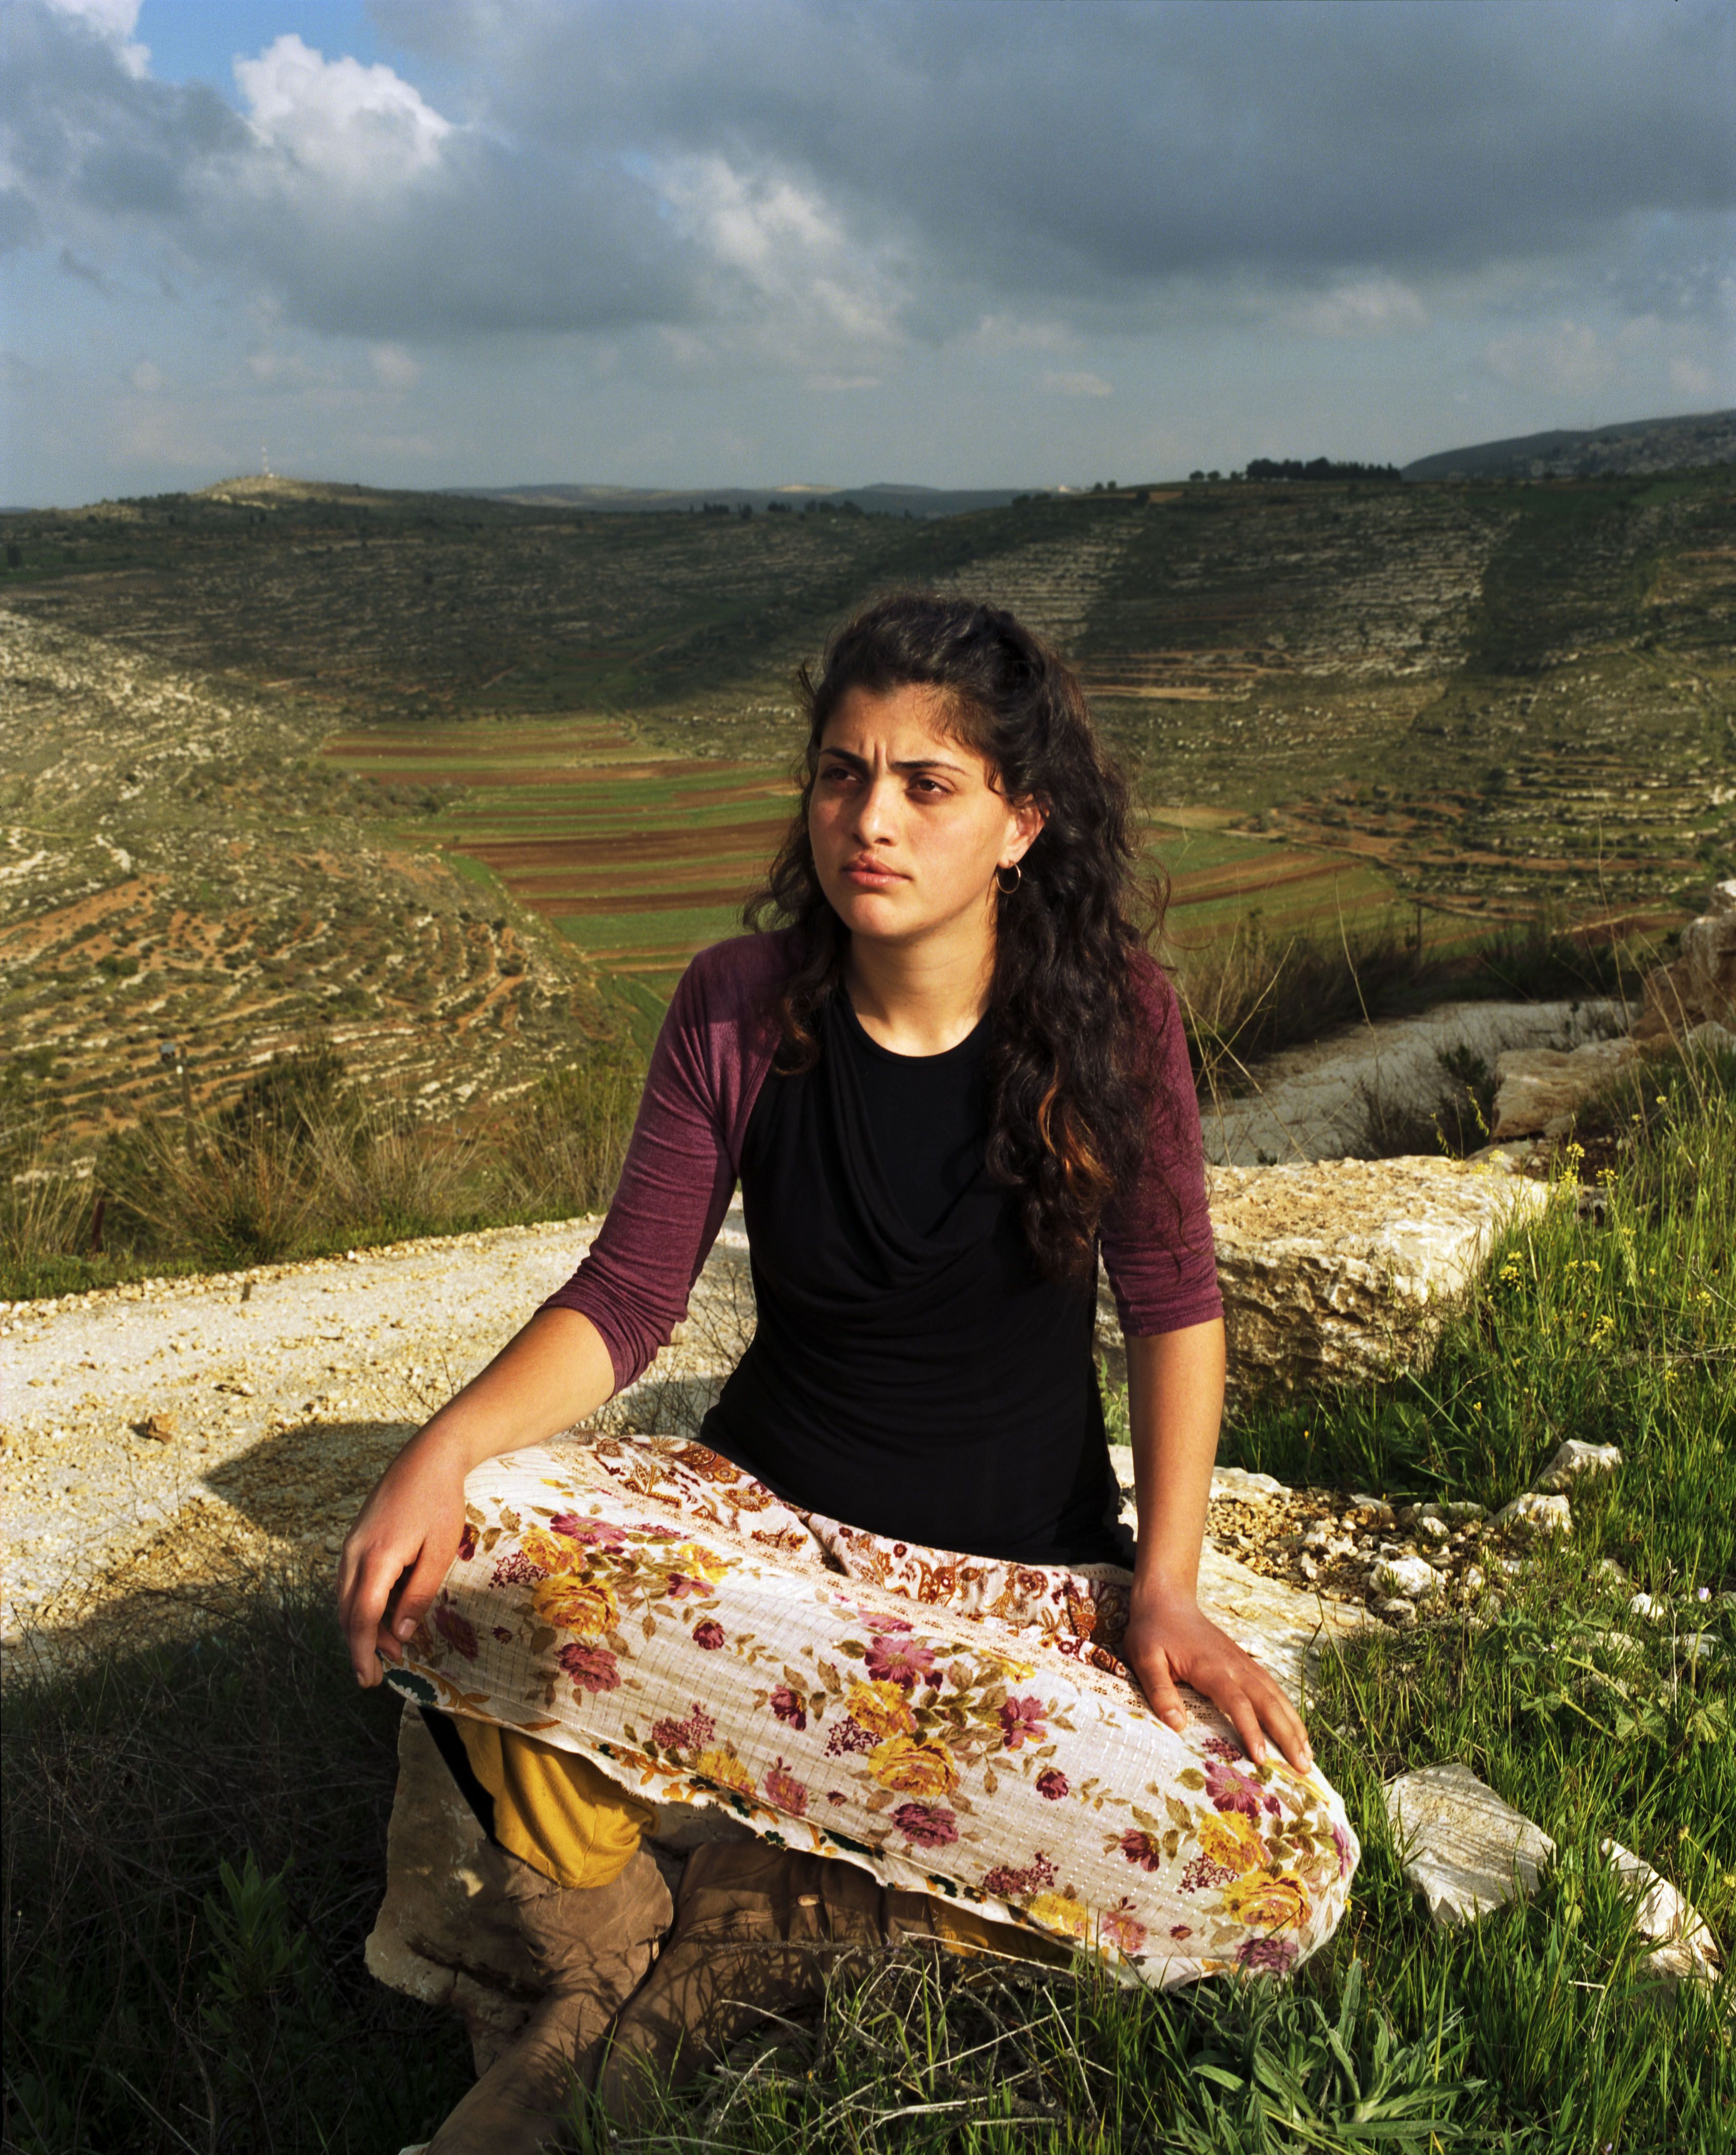 israeli girl from weeds